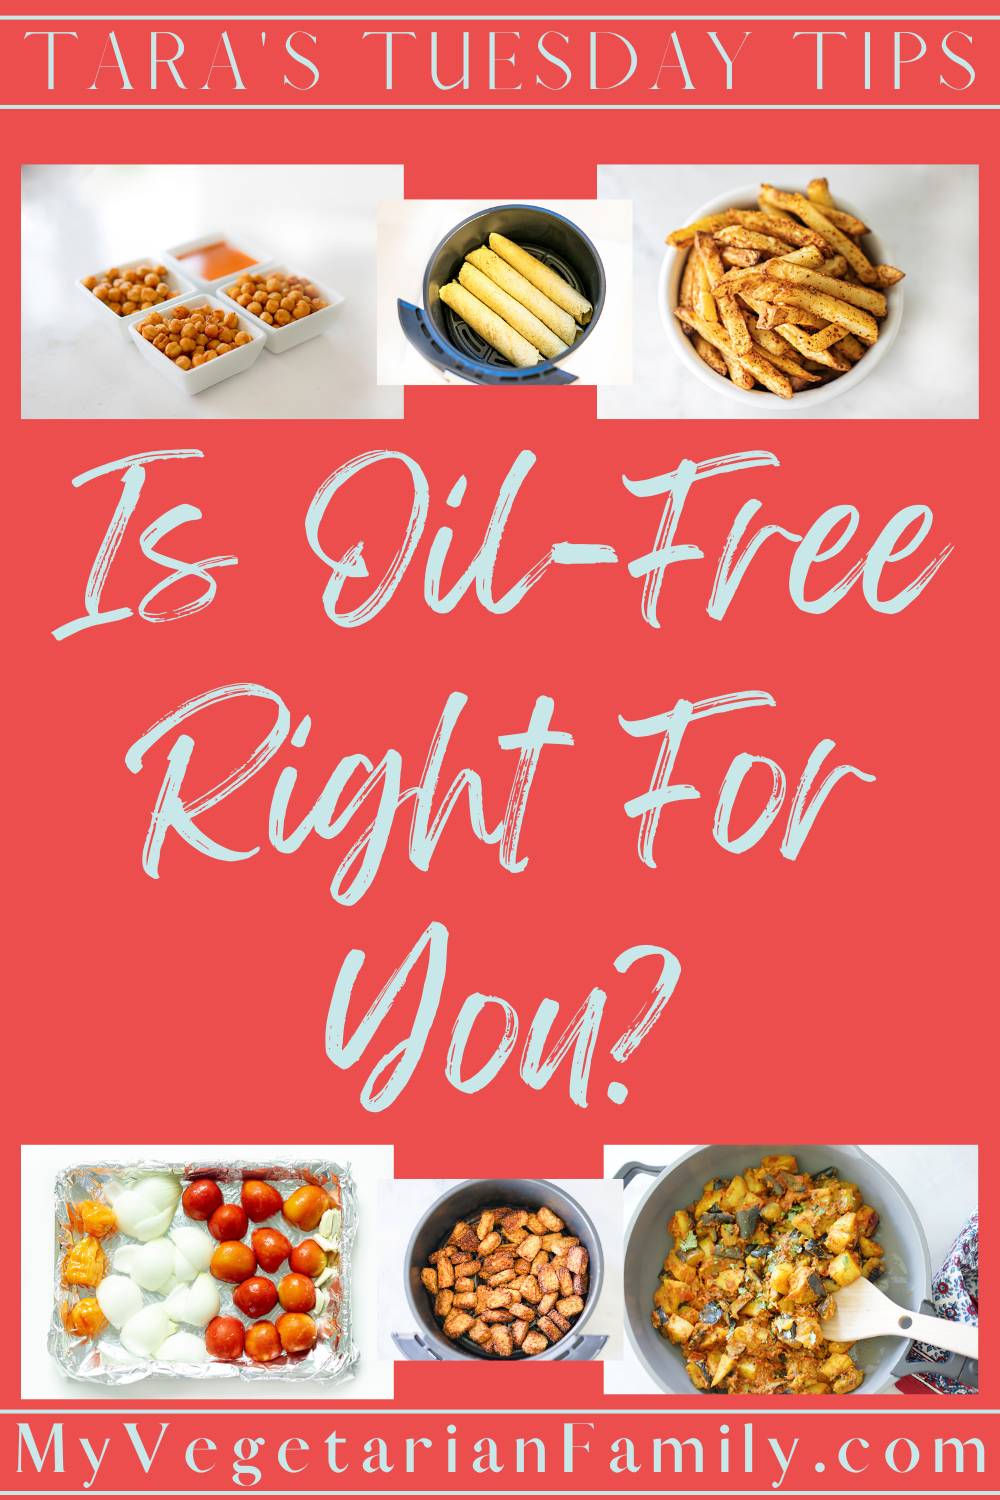 Is Oil-Free Right For You? | My Vegetarian Family | Tara's Tuesday Tips #oilfreediet #tarastuesdaytips